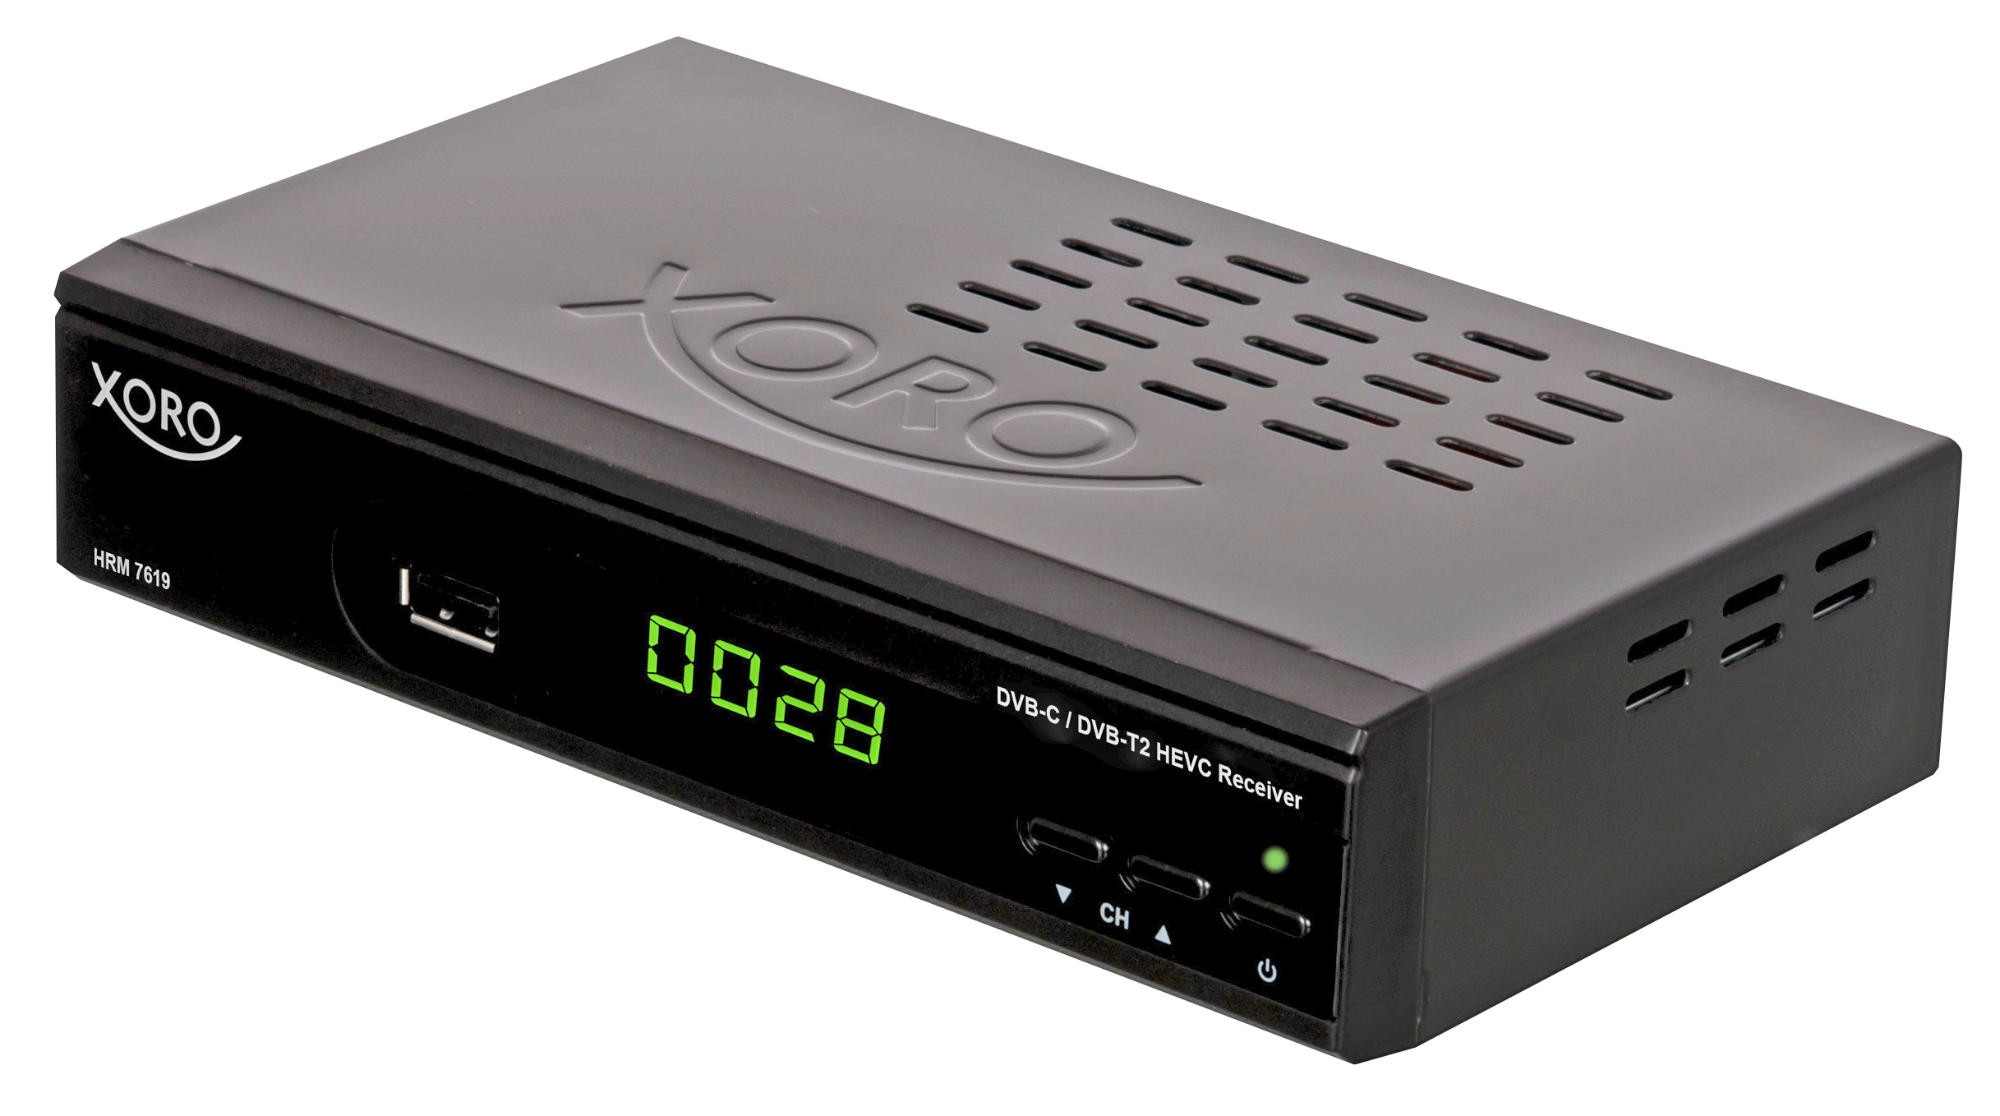 XORO HRM 7619 DVB-C2/T2 HD, DVB-T2 Receiver DVB-C, HD DVB-C2, Schwarz) (HDTV